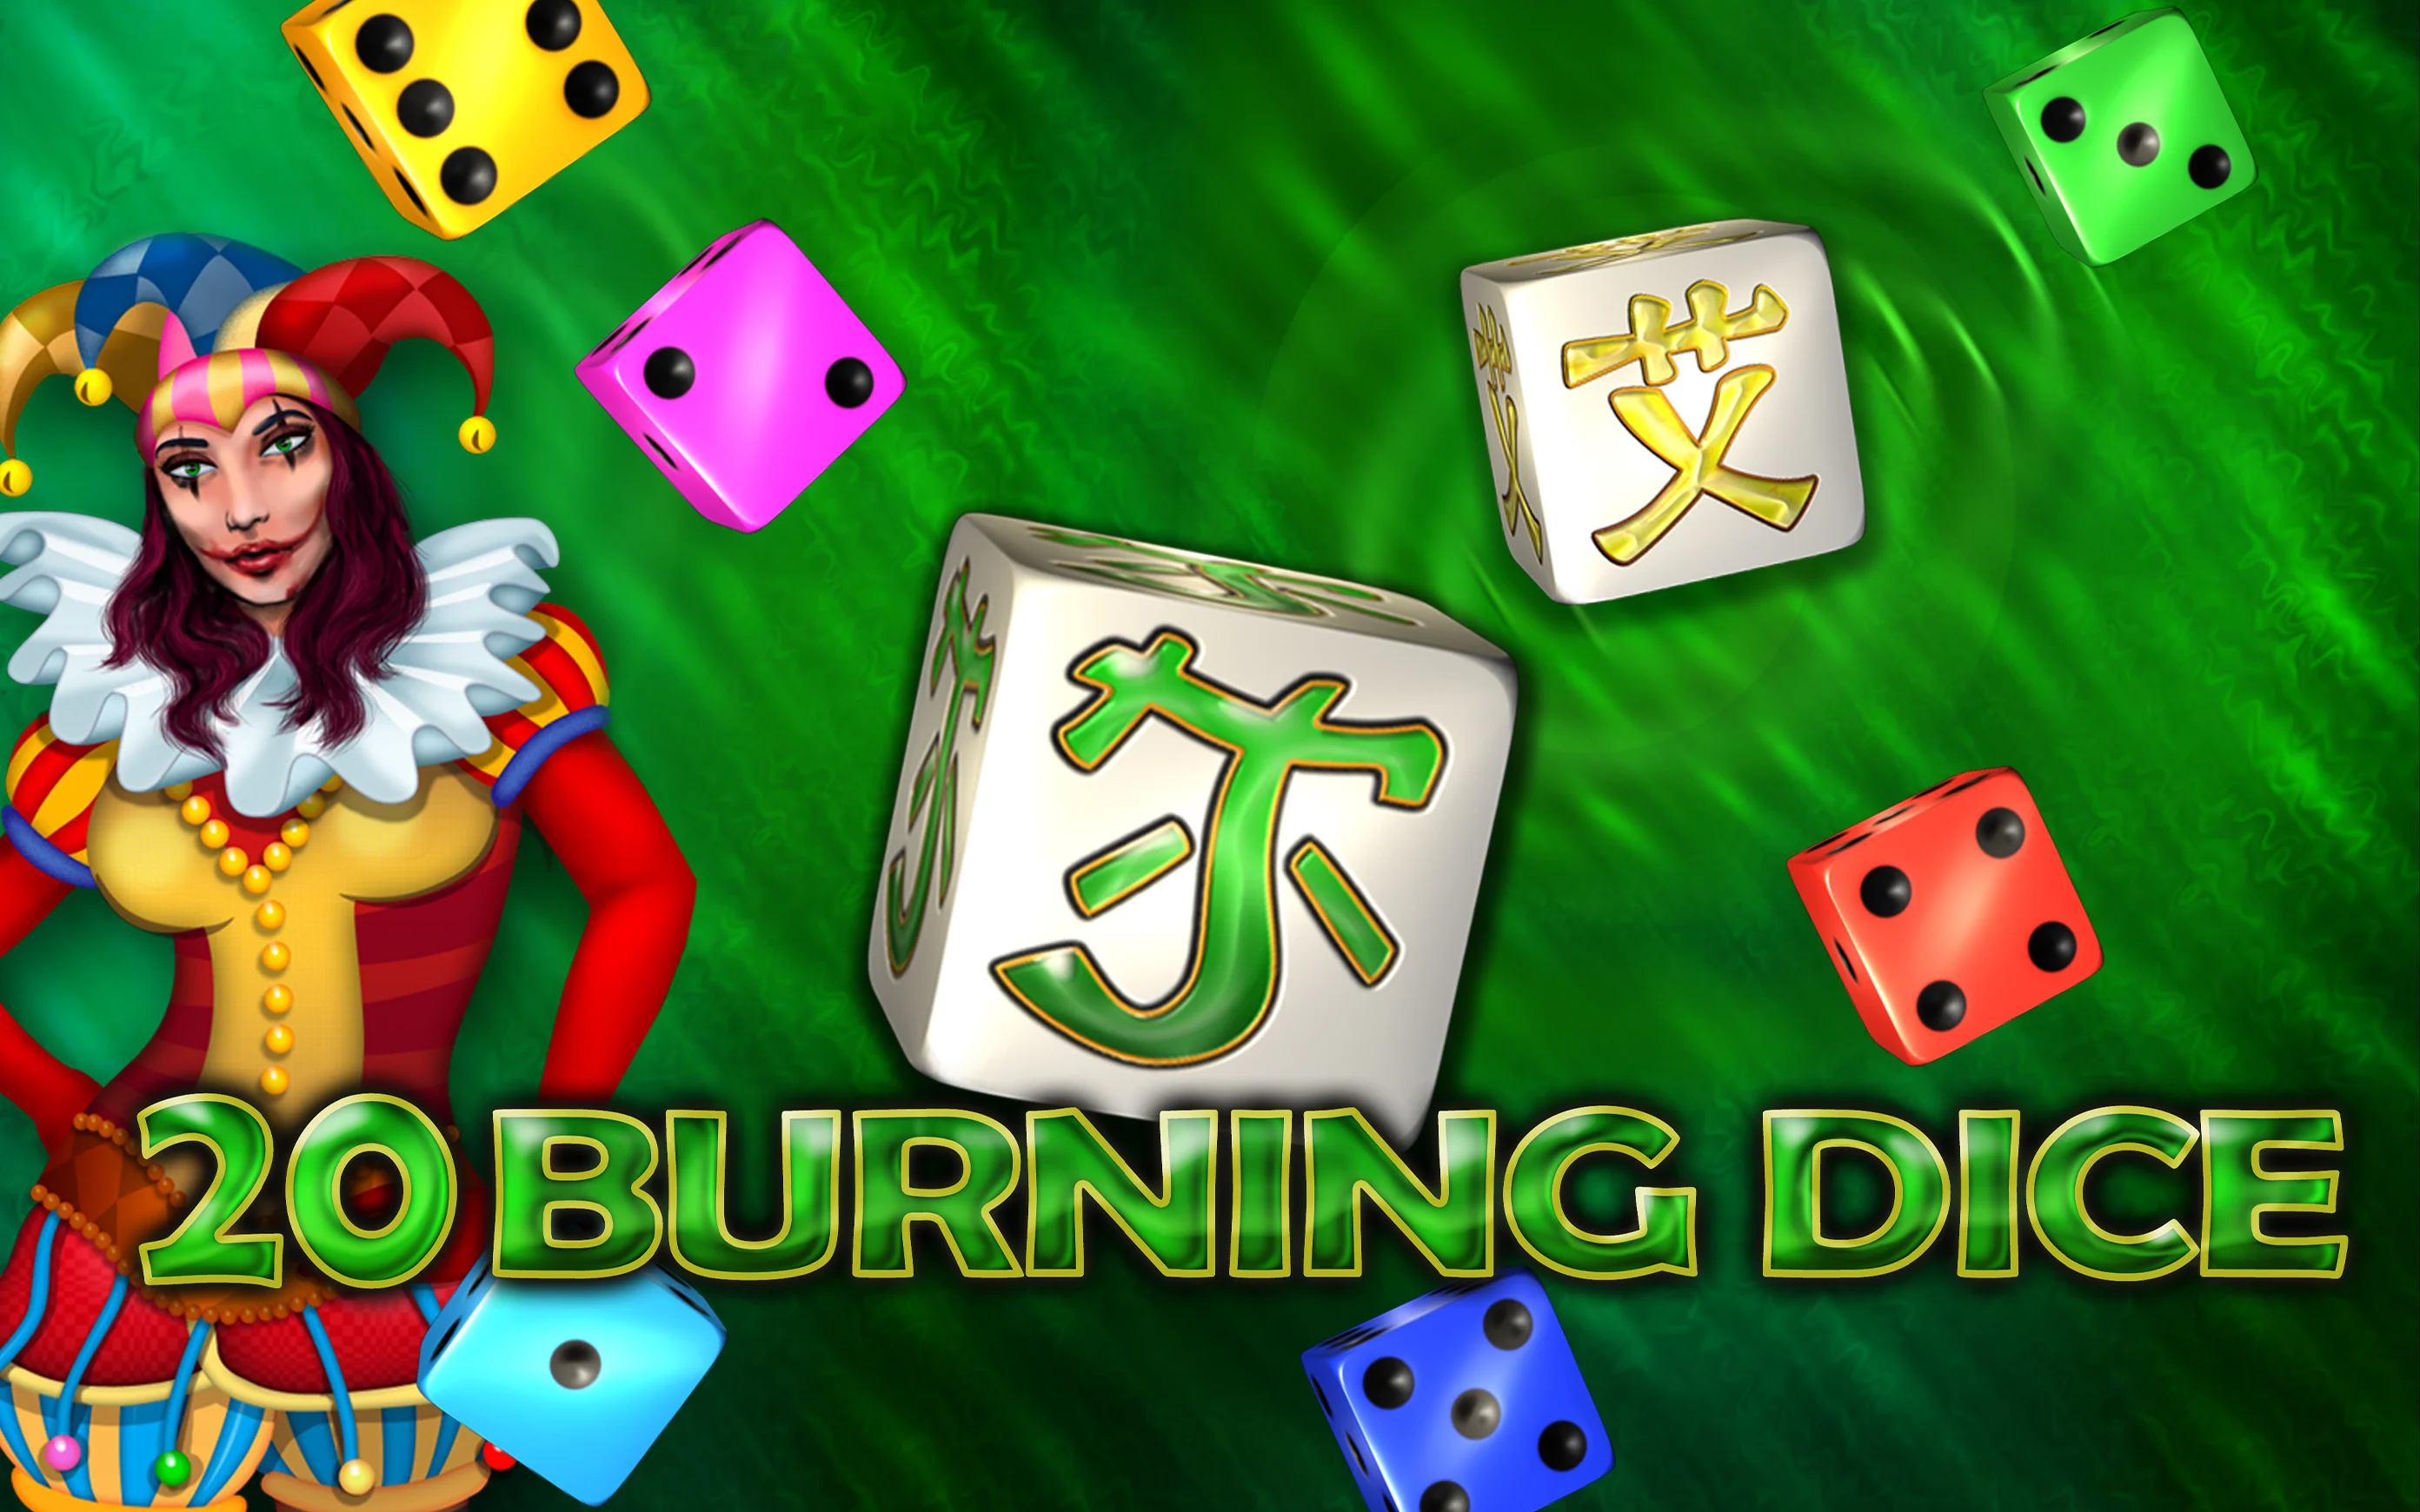 Play 20 Burning Dice on Starcasino.be online casino